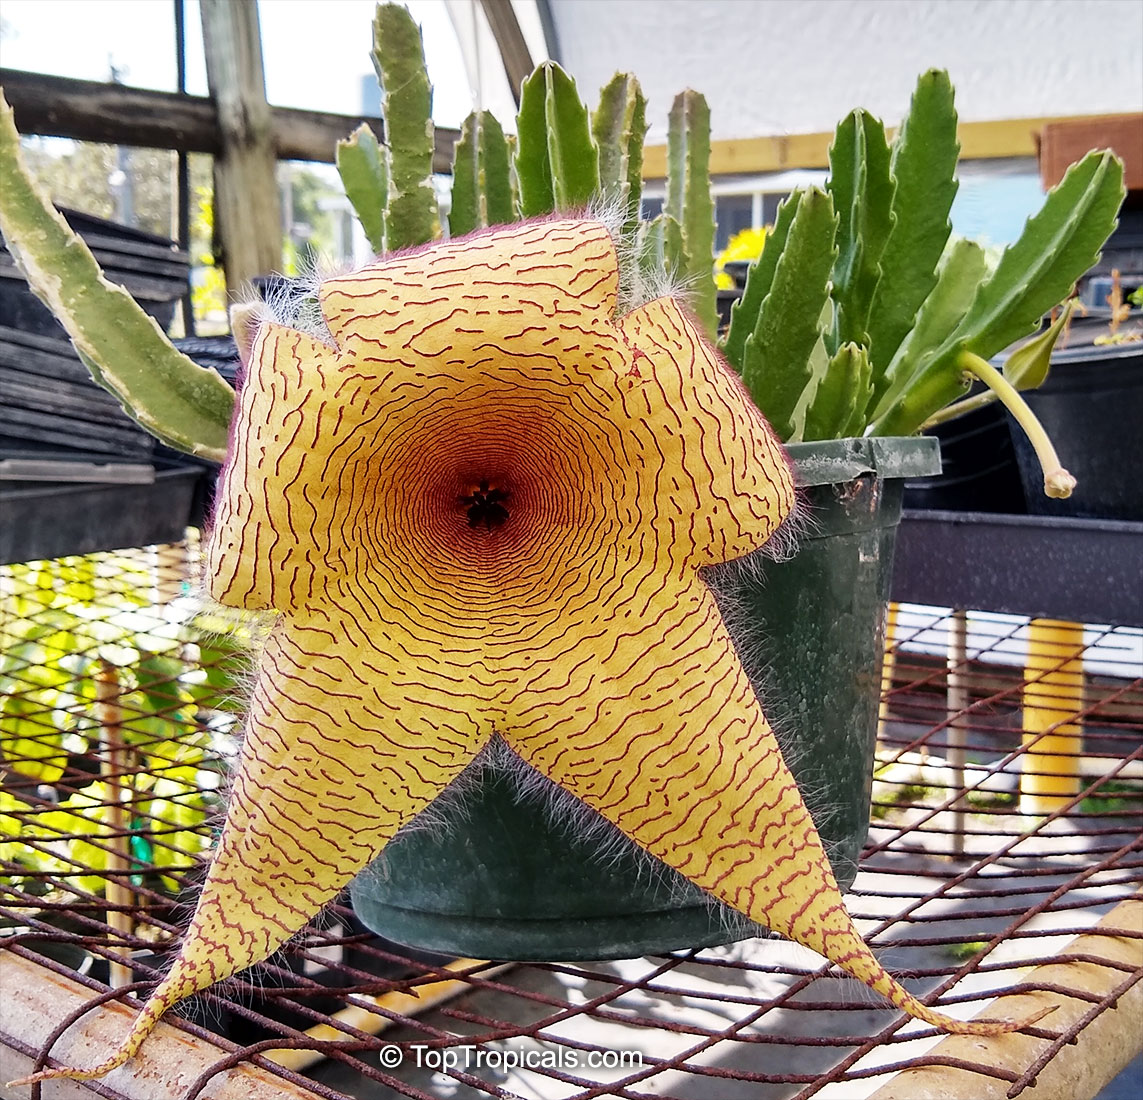 Stapelia gigantea, Zulu Giant, Carrion Plant, Starfish Flower